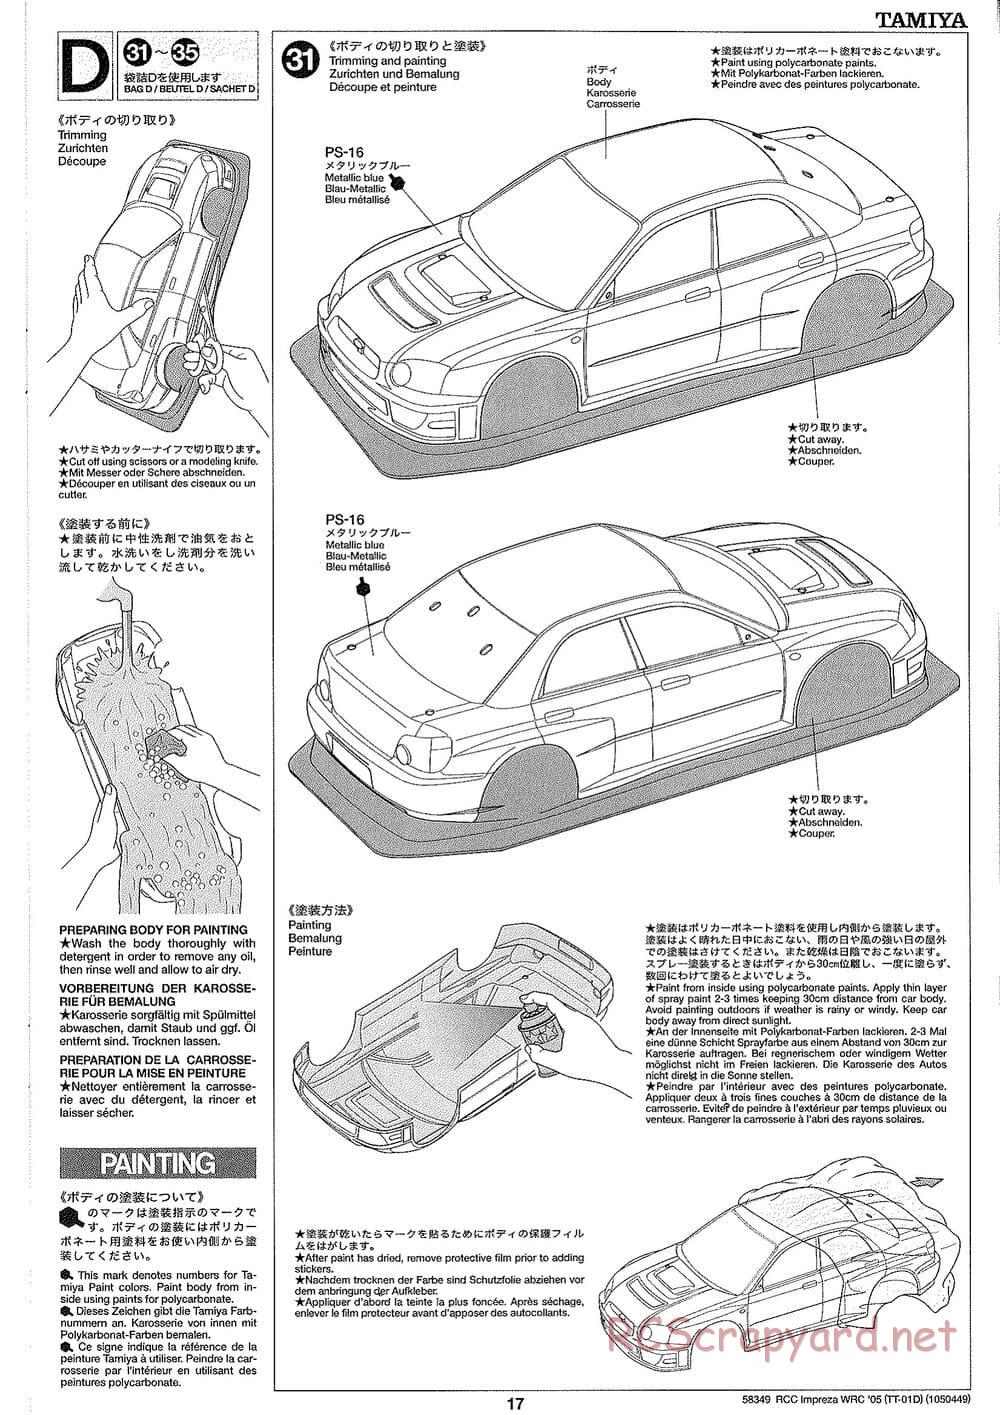 Tamiya - Subaru Impreza WRC Monte Carlo 05 - Drift Spec - TT-01D Chassis - Manual - Page 17